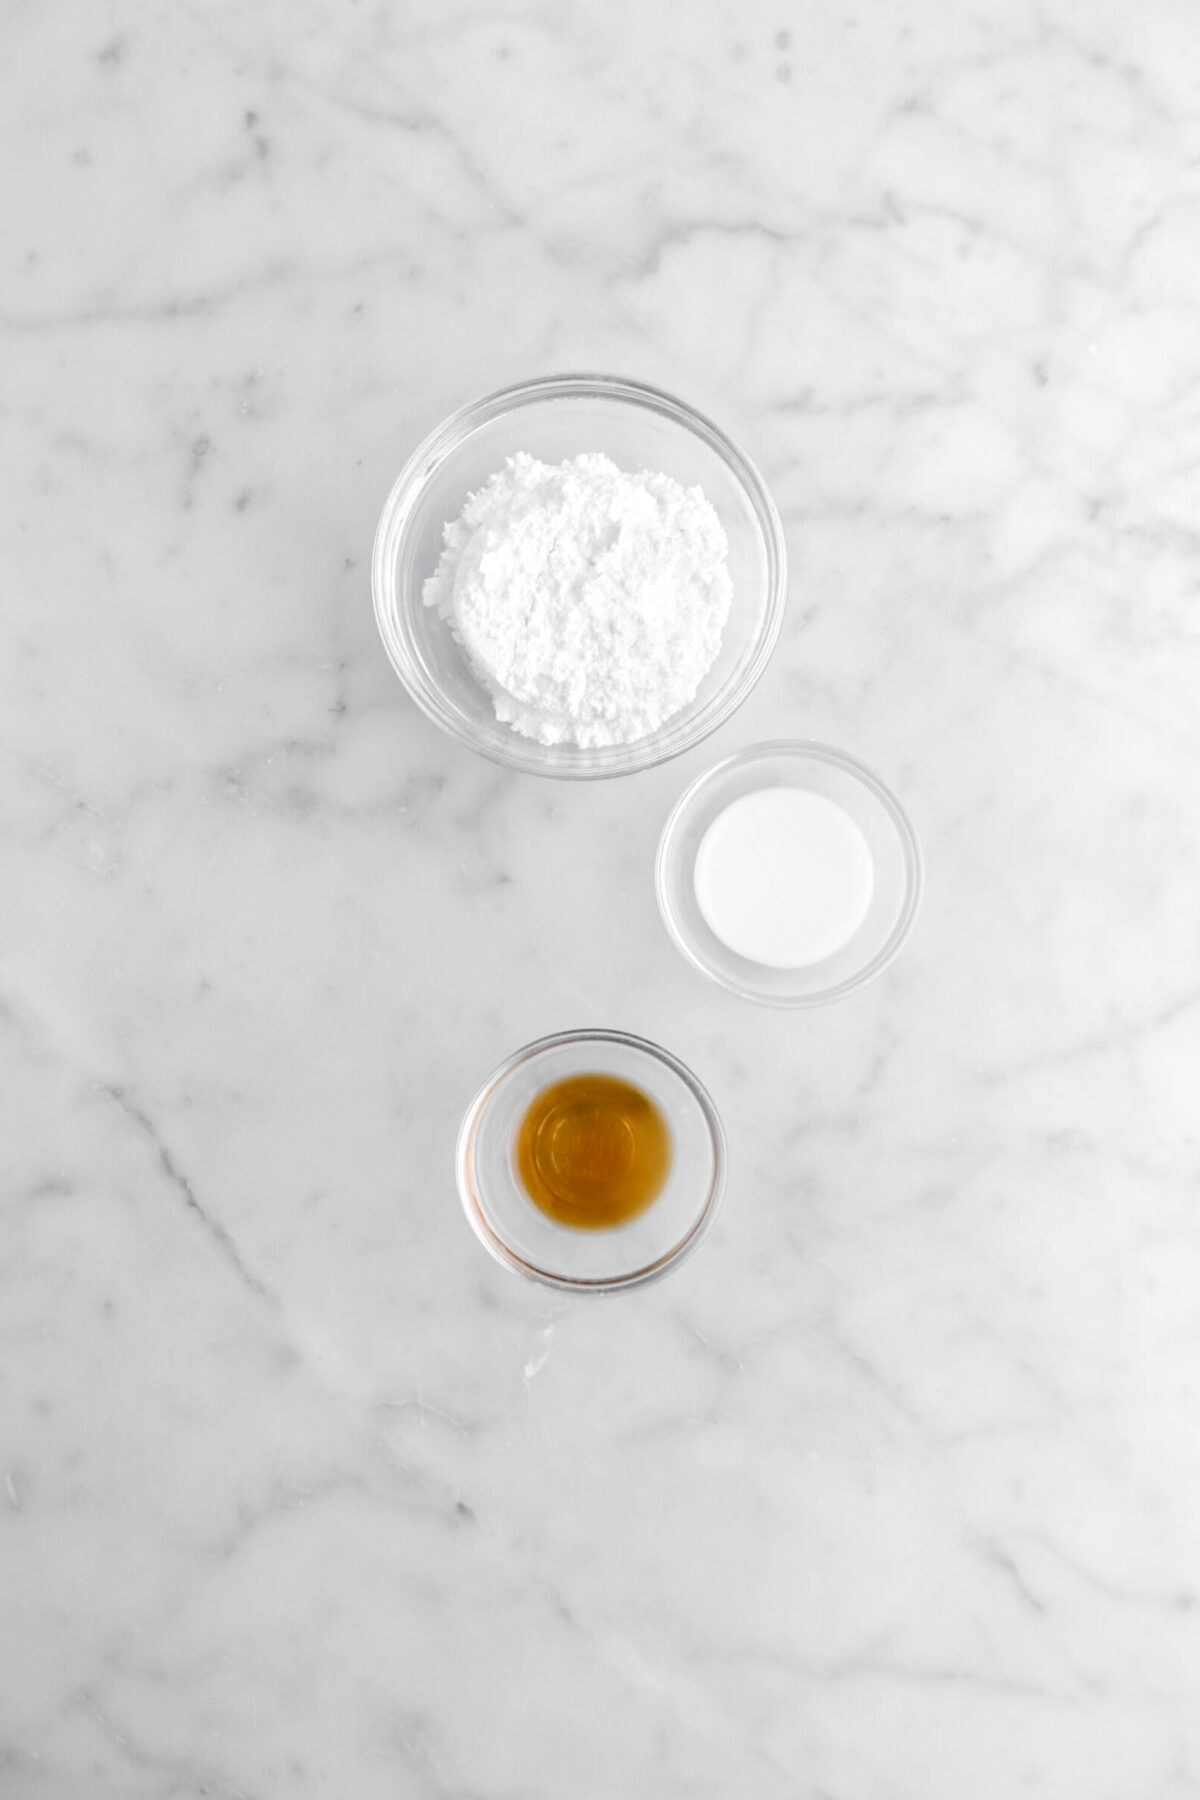 powdered sugar, milk, and vanilla on marble surface.